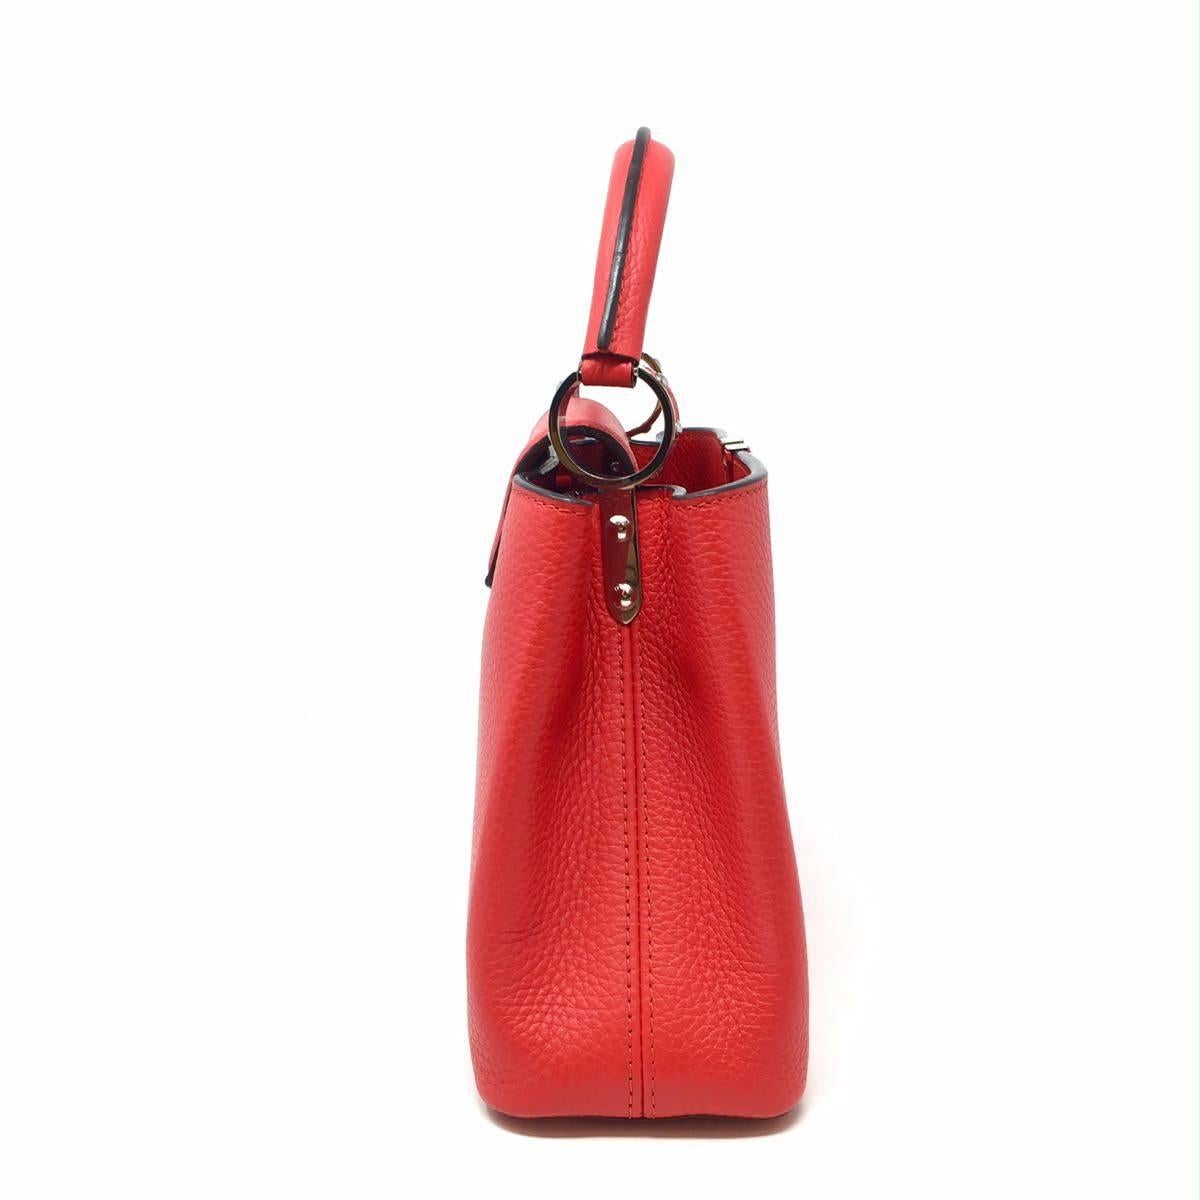 Red Louis Vuitton Capucine Coquelicot Leather Tote Bag, 2014